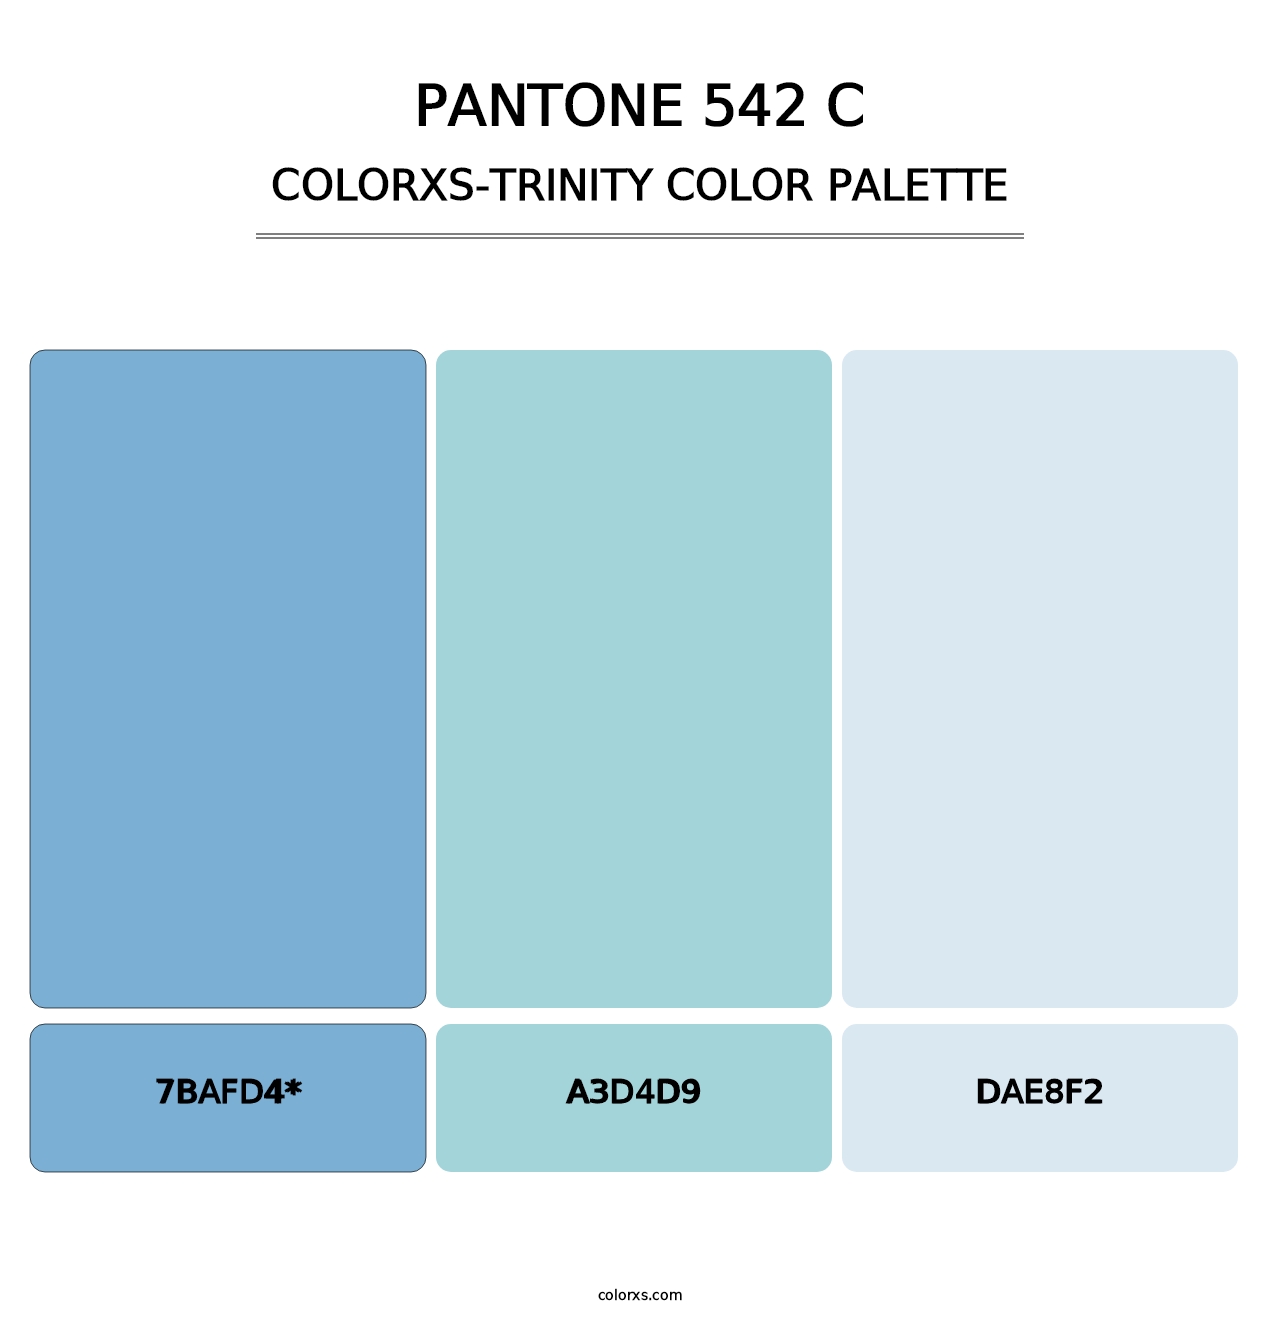 PANTONE 542 C - Colorxs Trinity Palette